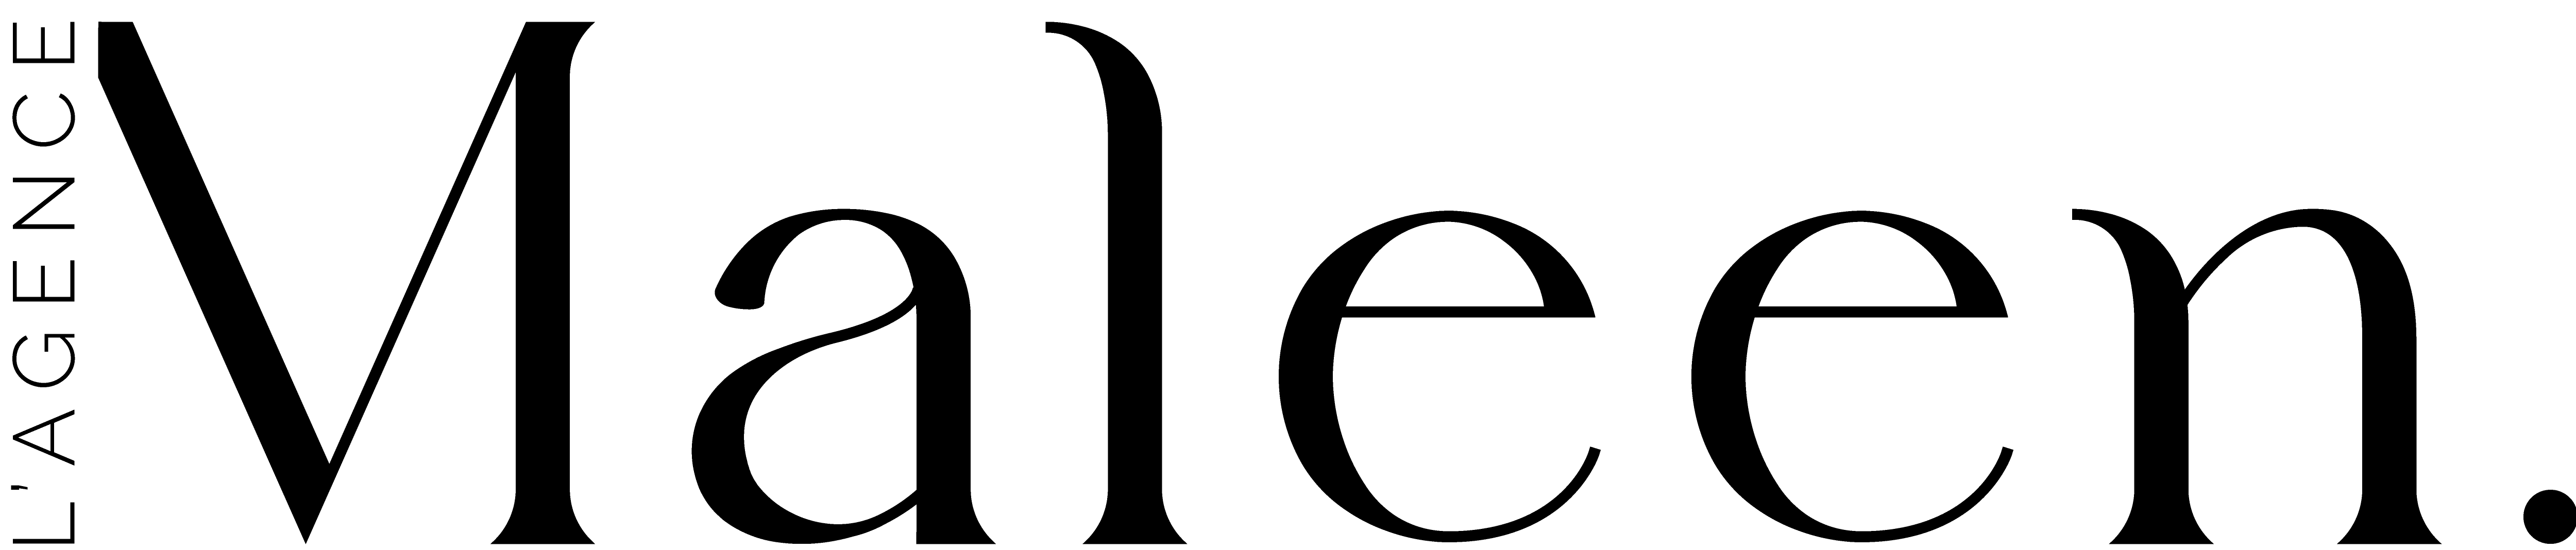 logo agence maleen communication pour tpe